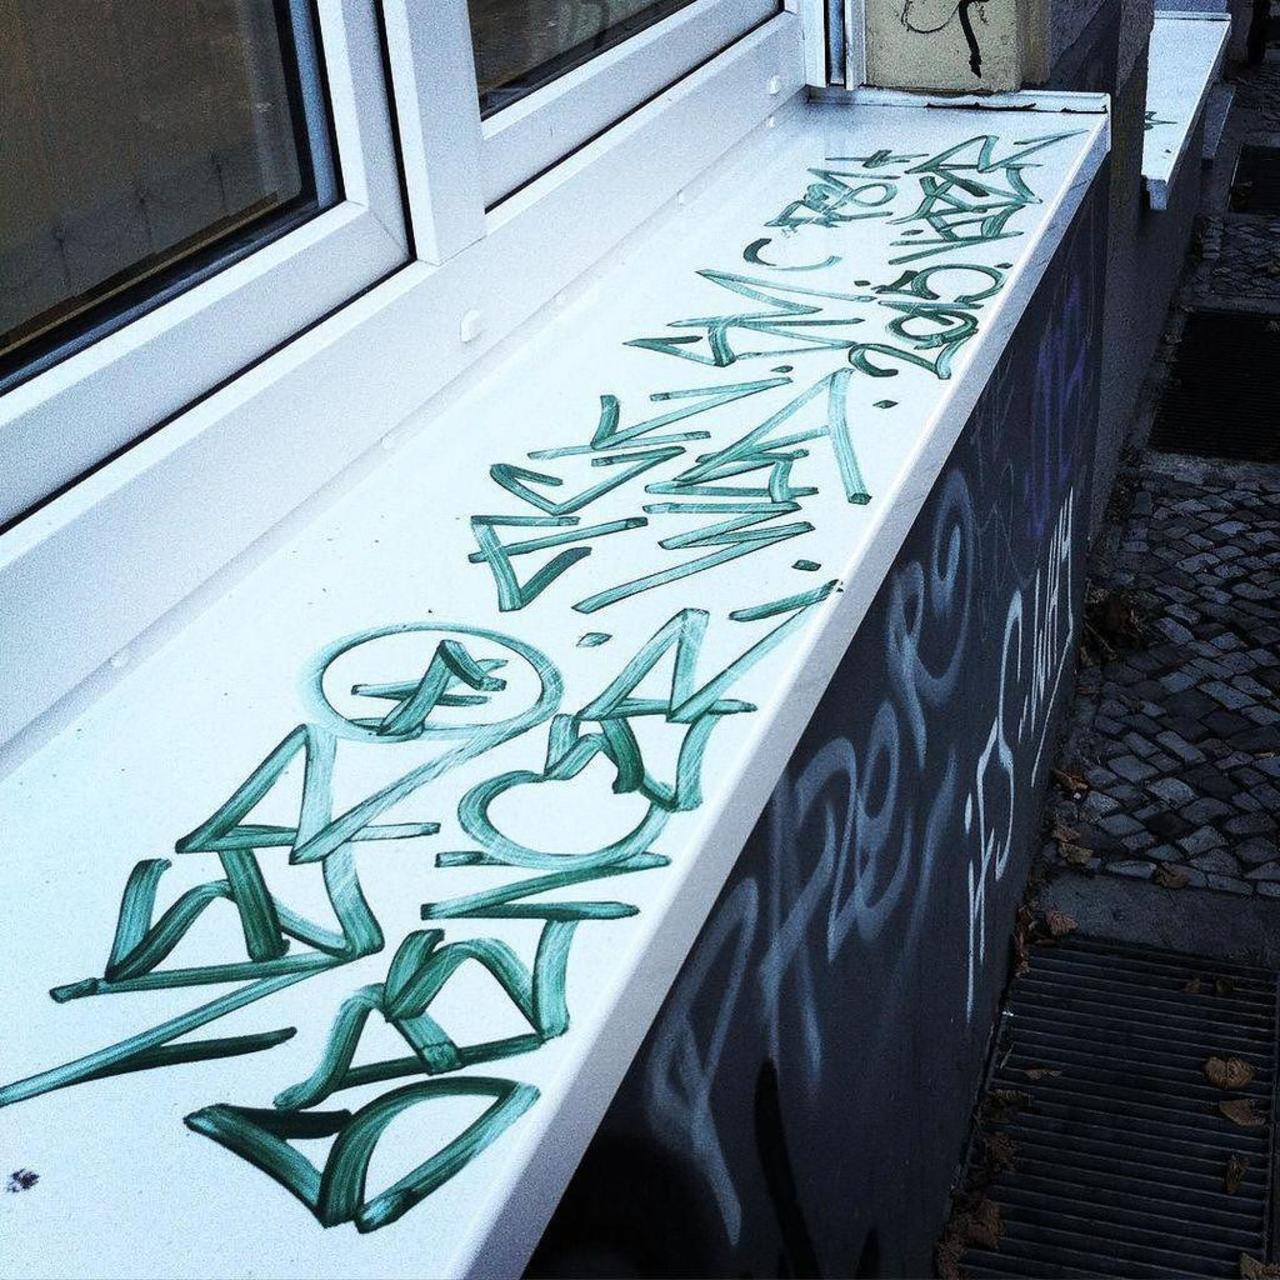 via #berlintags "http://ift.tt/1LNflNn" #graffiti #streetart http://t.co/VdsHUCtNQI